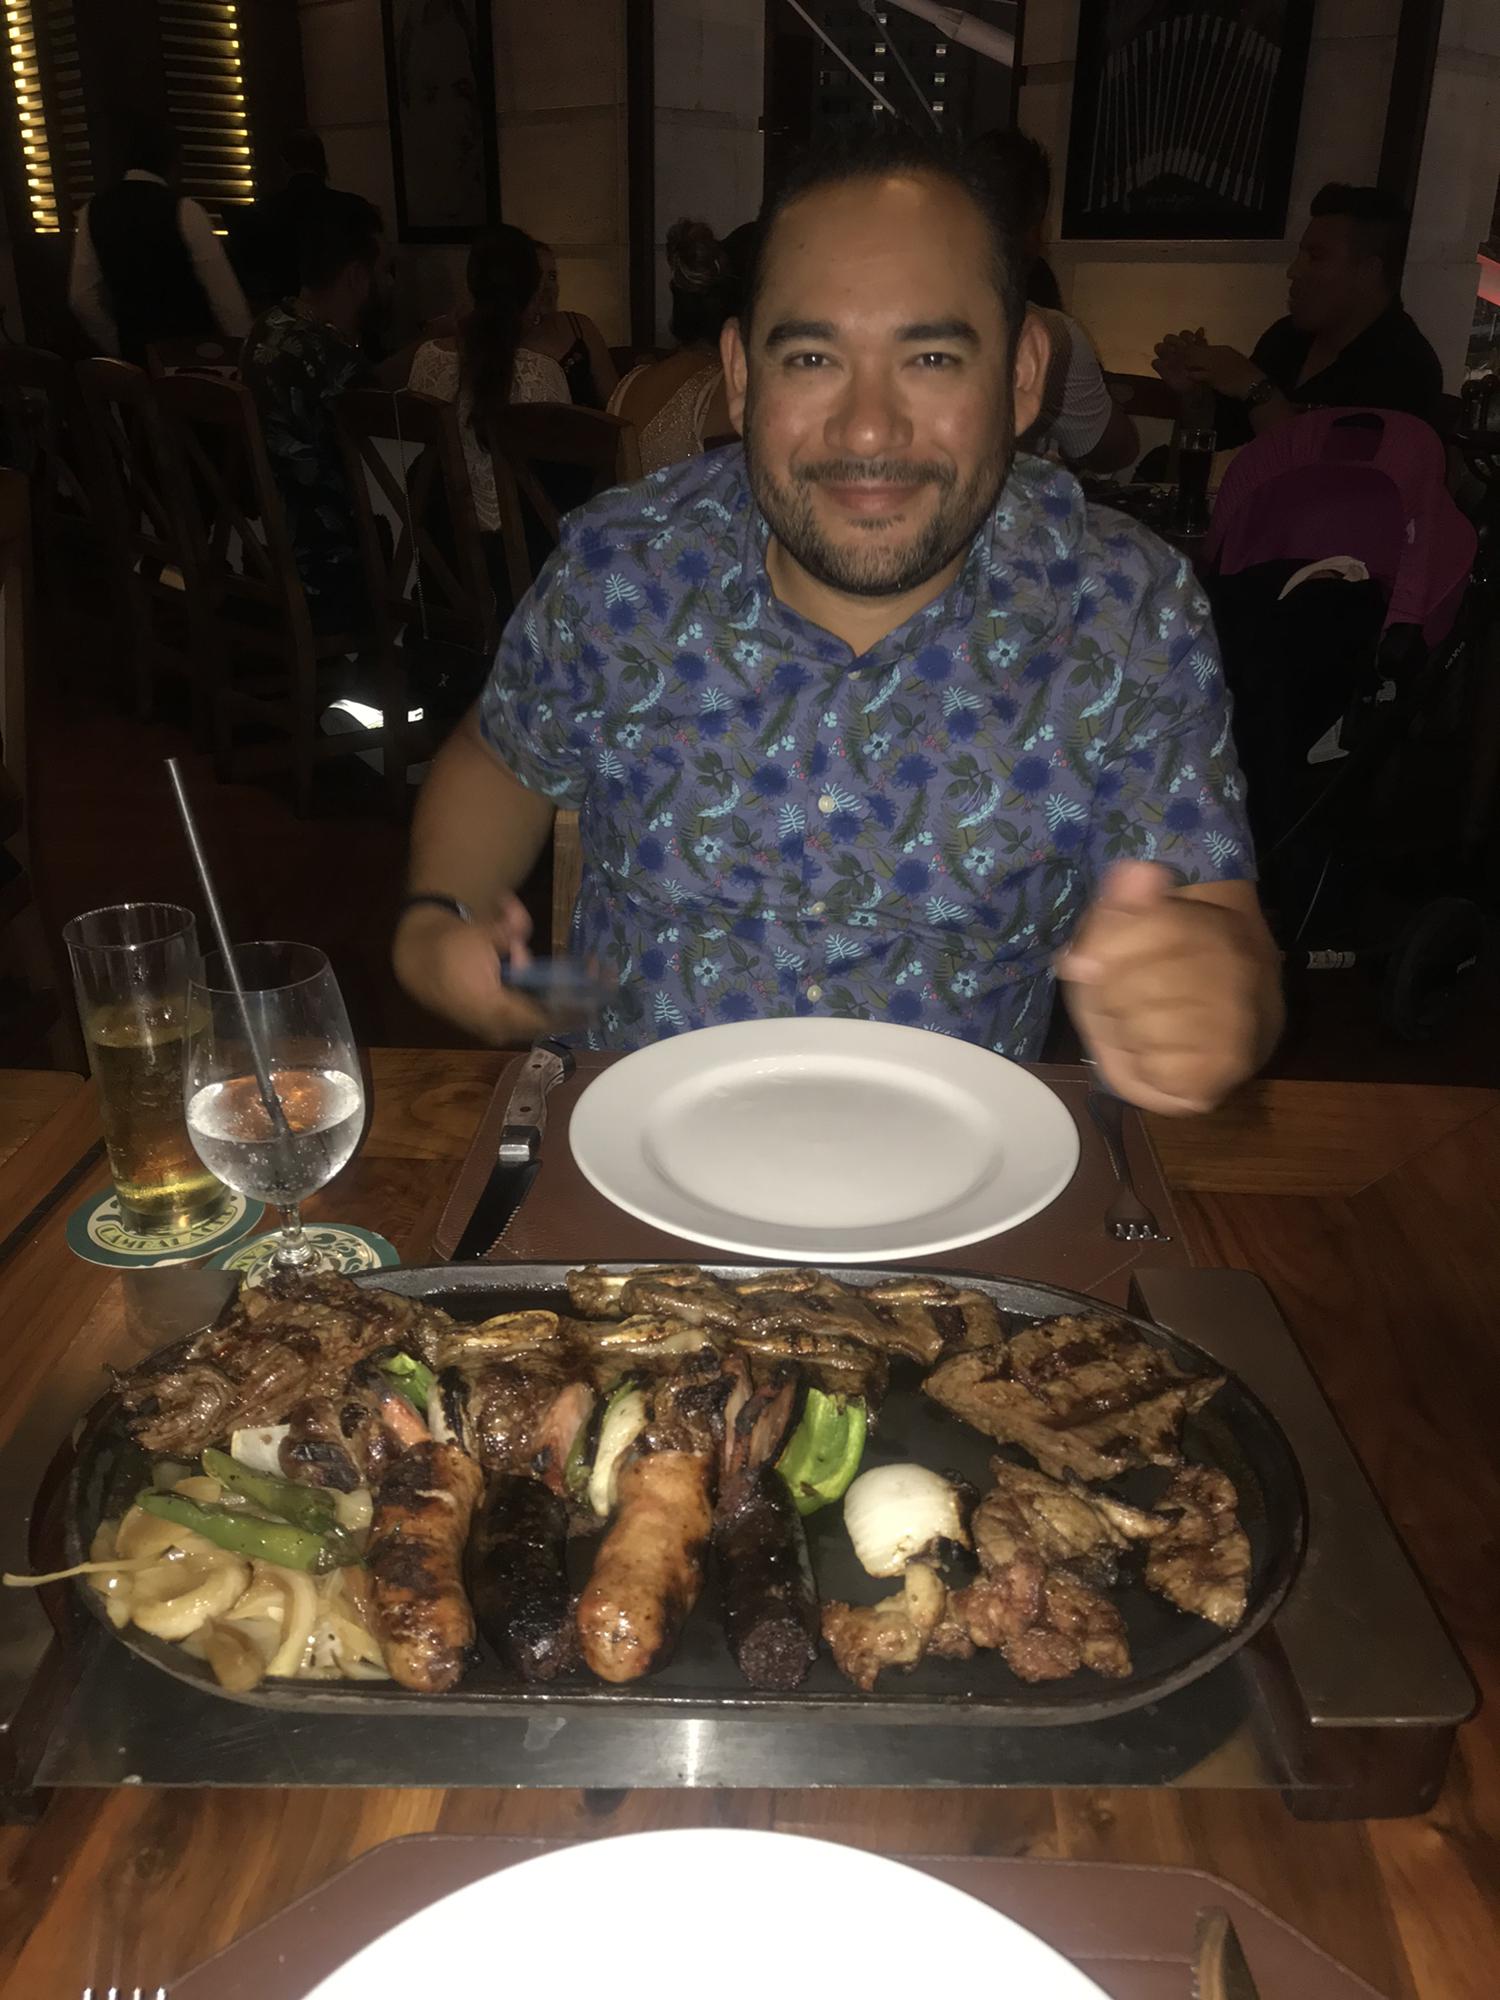 Man vs Food, Cancun Edition